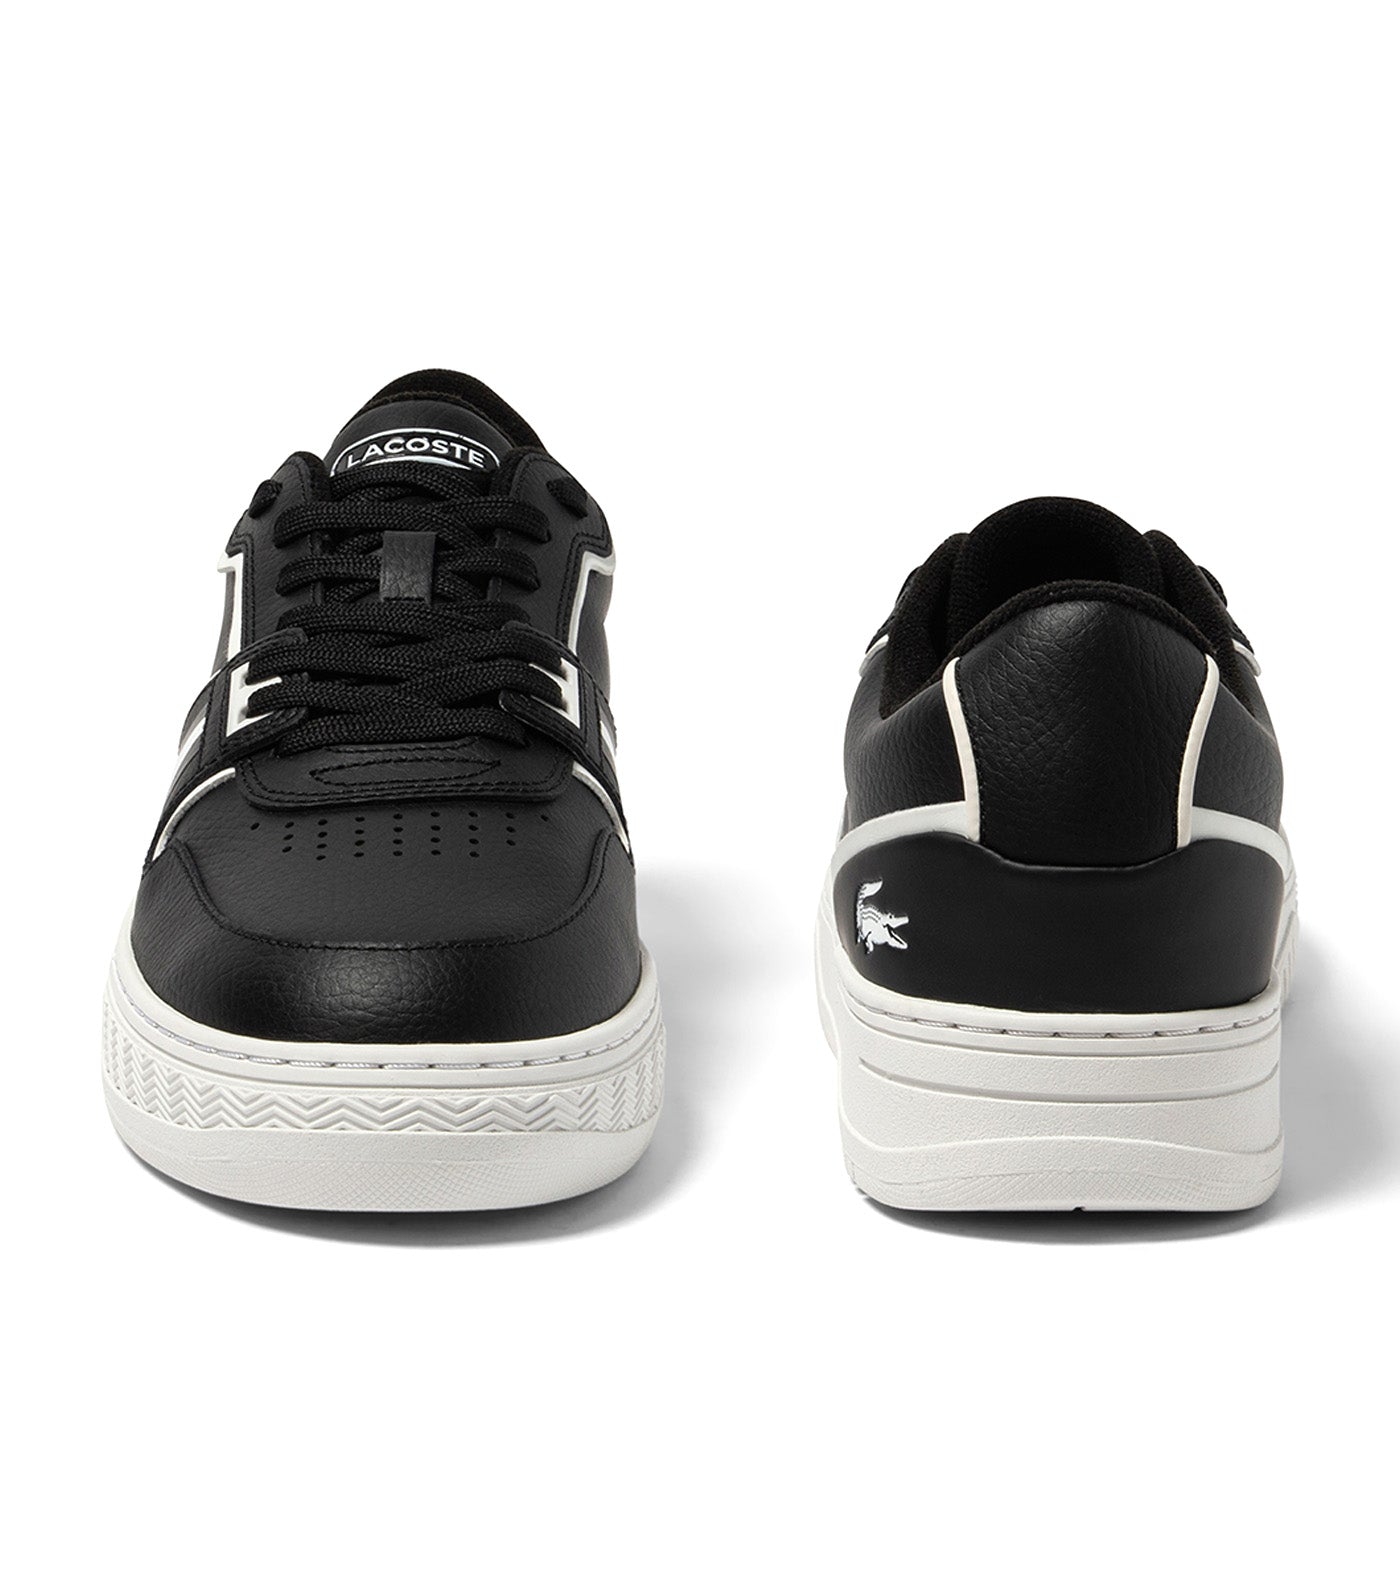 Men's Lacoste L001 Baseline Leather Trainers Black/White